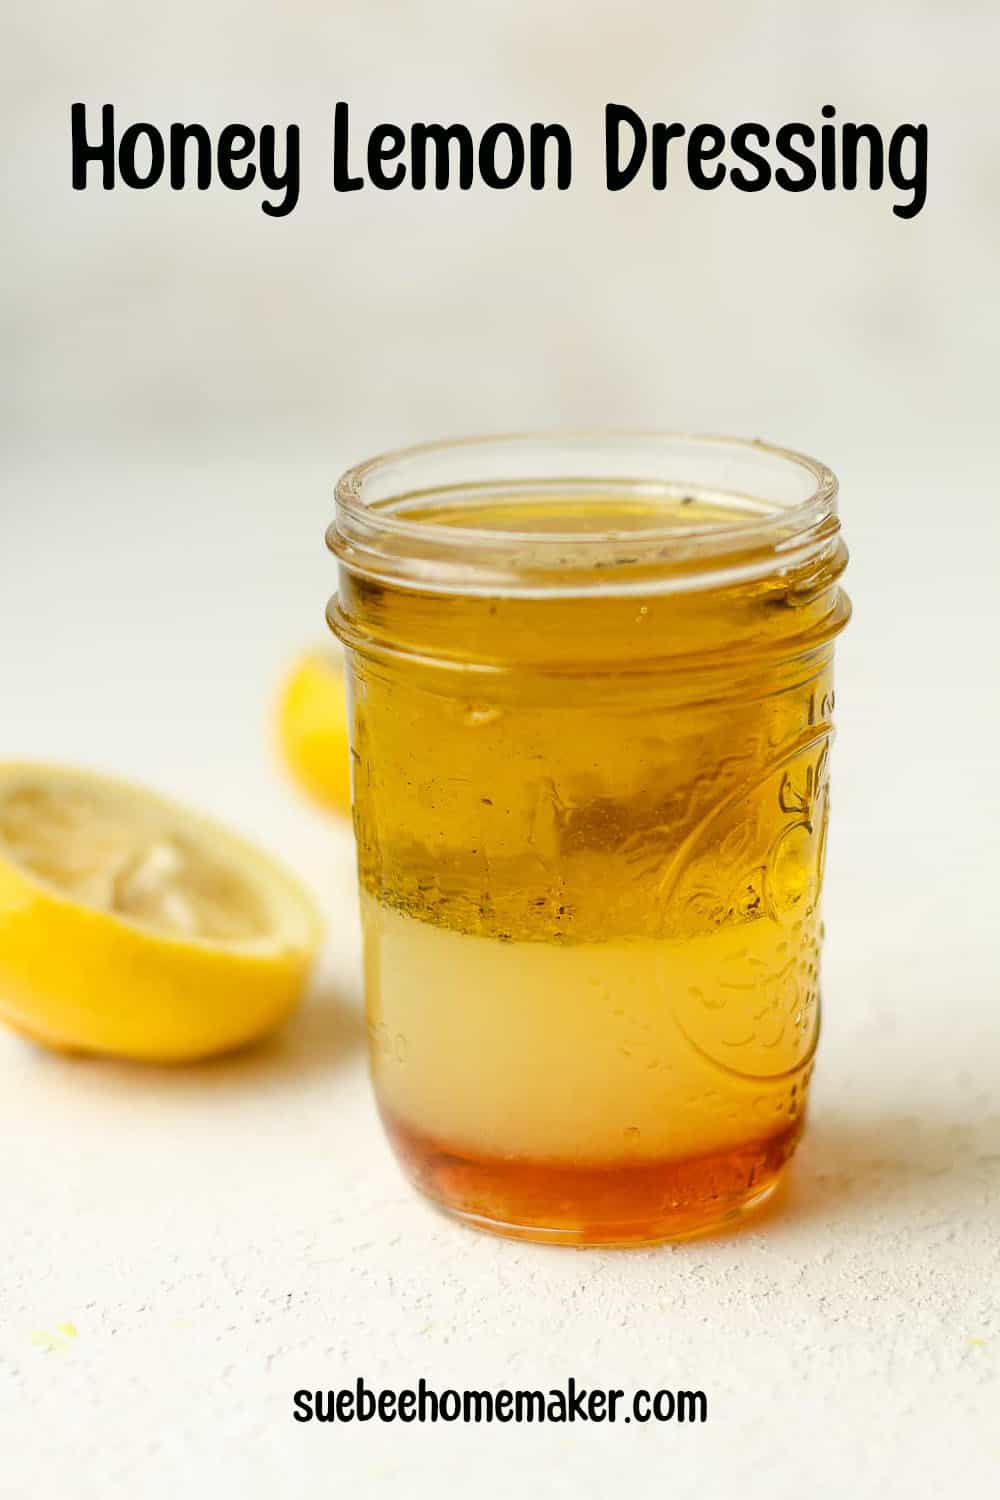 A jar of honey lemon dressing.